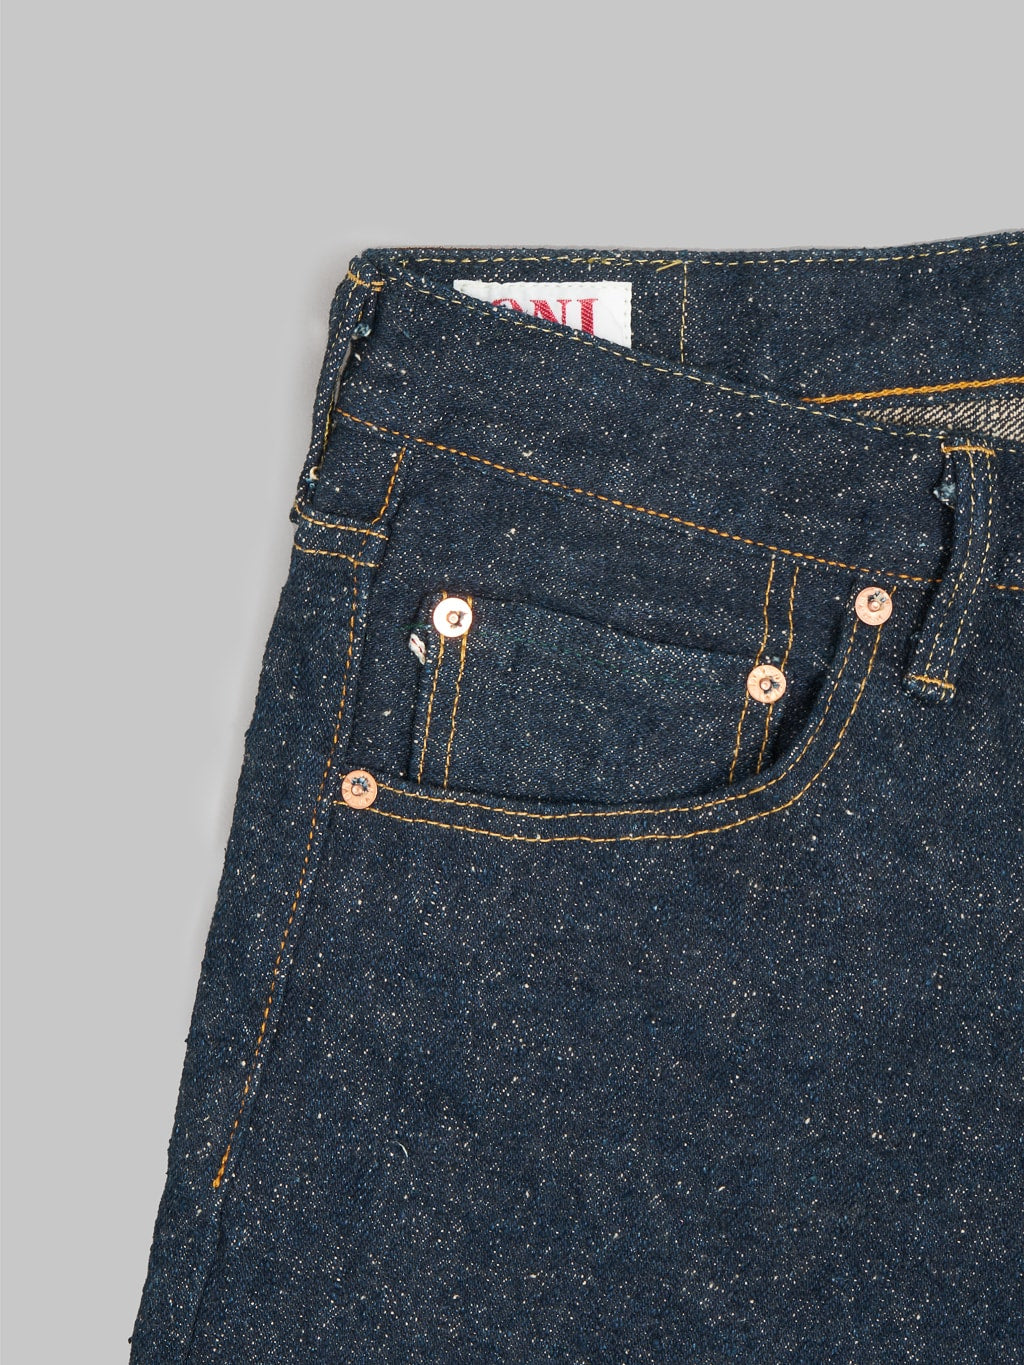 ONI Denim 246SESR Secret Super Rough Neat Straight selvedge Jeans coin pocket